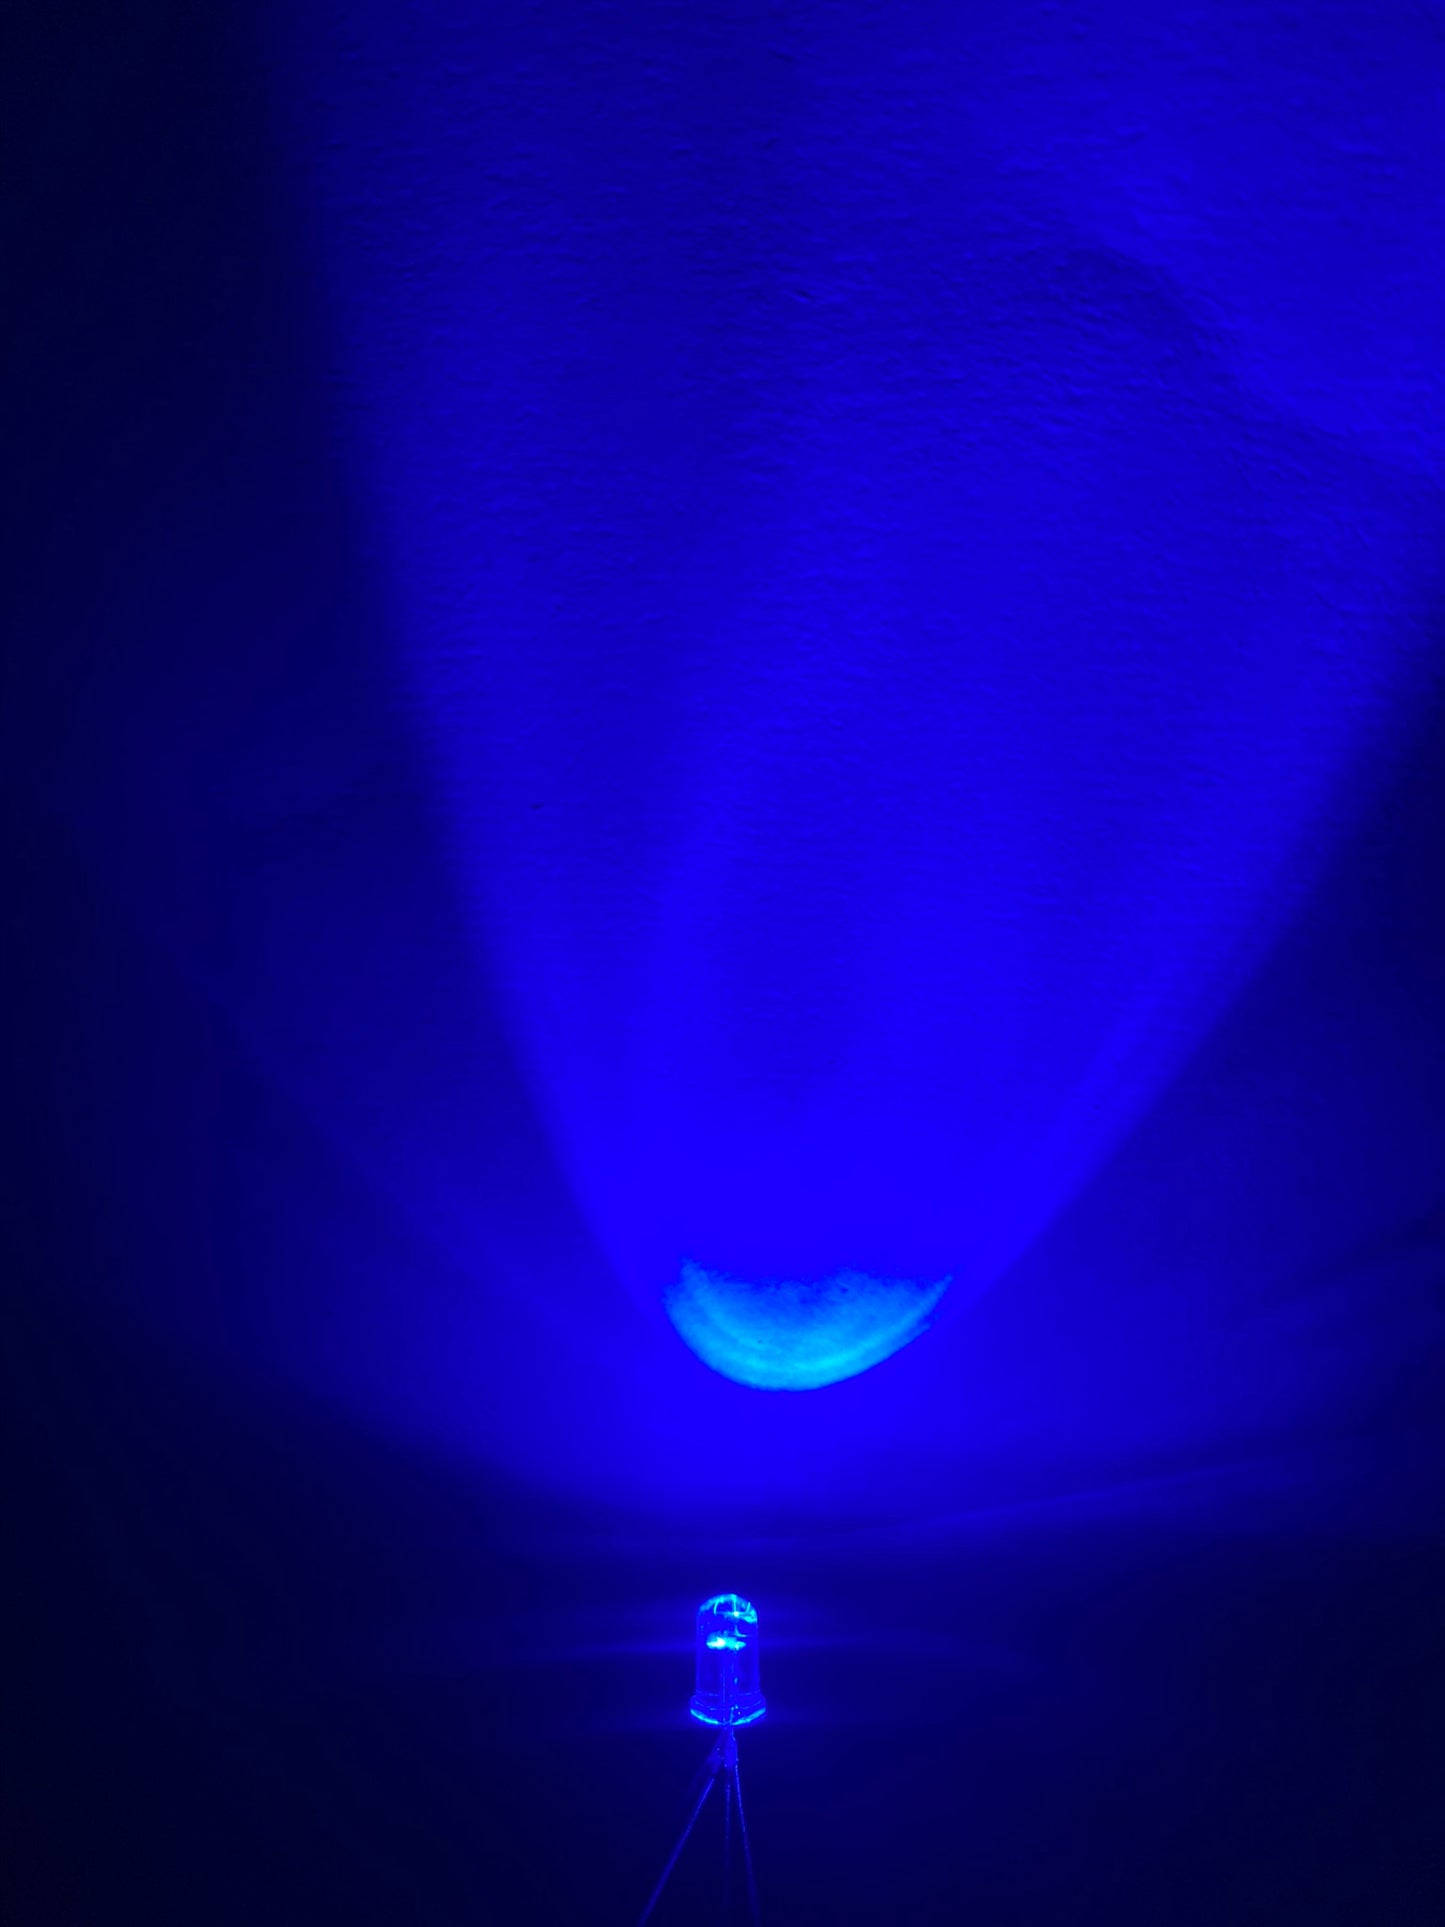 Diodo LED 5mm RGB 4 pines Ánodo común | Diodo emisor luz LED